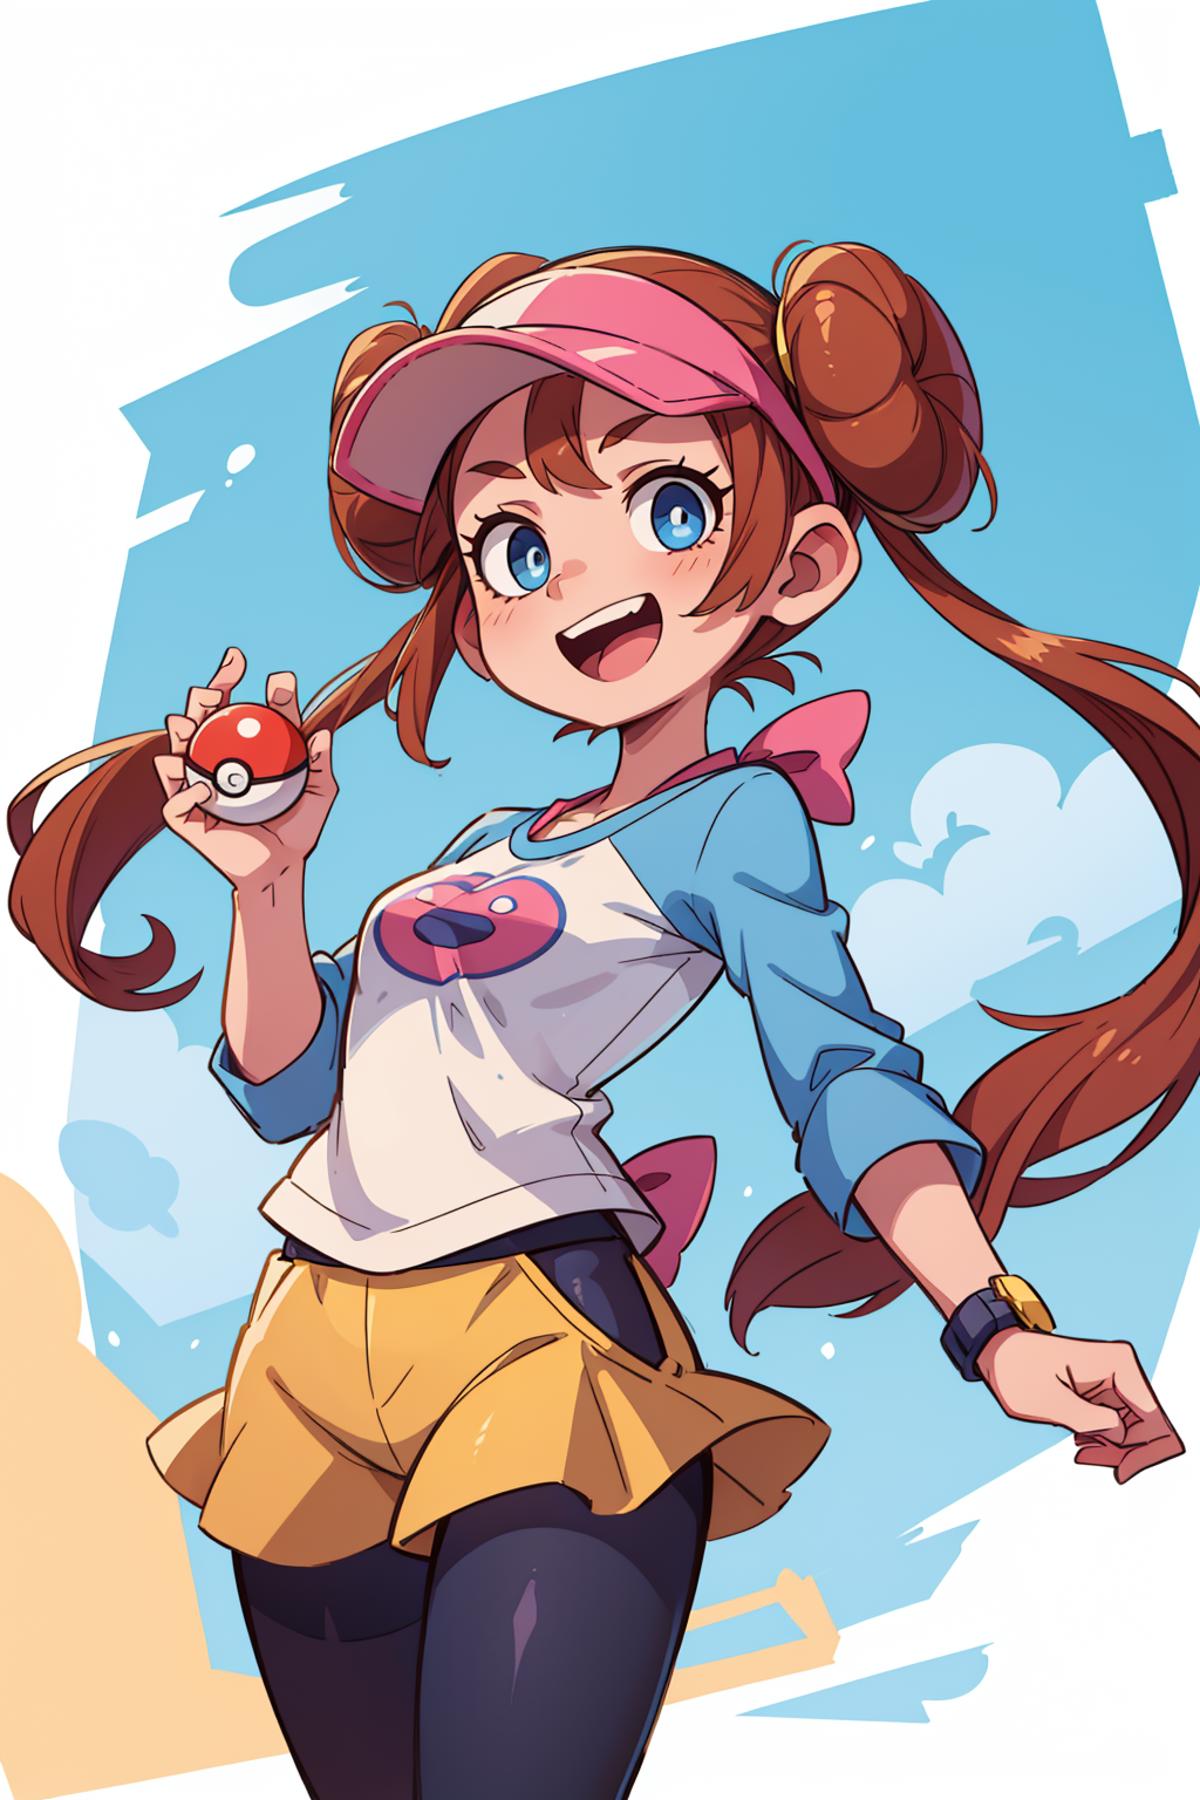 Rosa メイ / Pokemon image by disti001